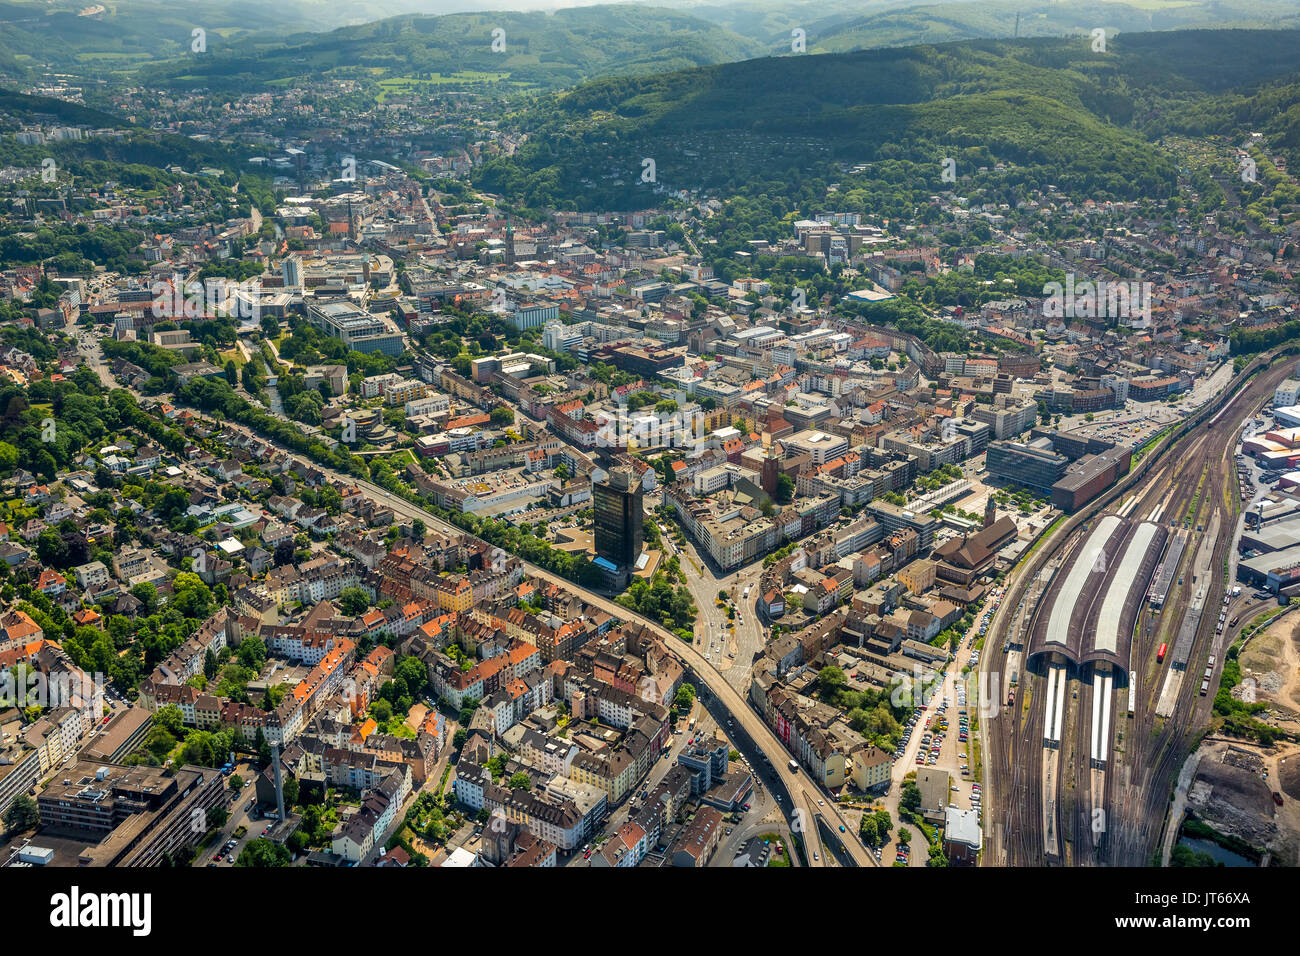 View of Altenhagen and Hagen city center, aerial photo, Hagen, Ruhr area, North Rhine-Westphalia, Germany Stock Photo